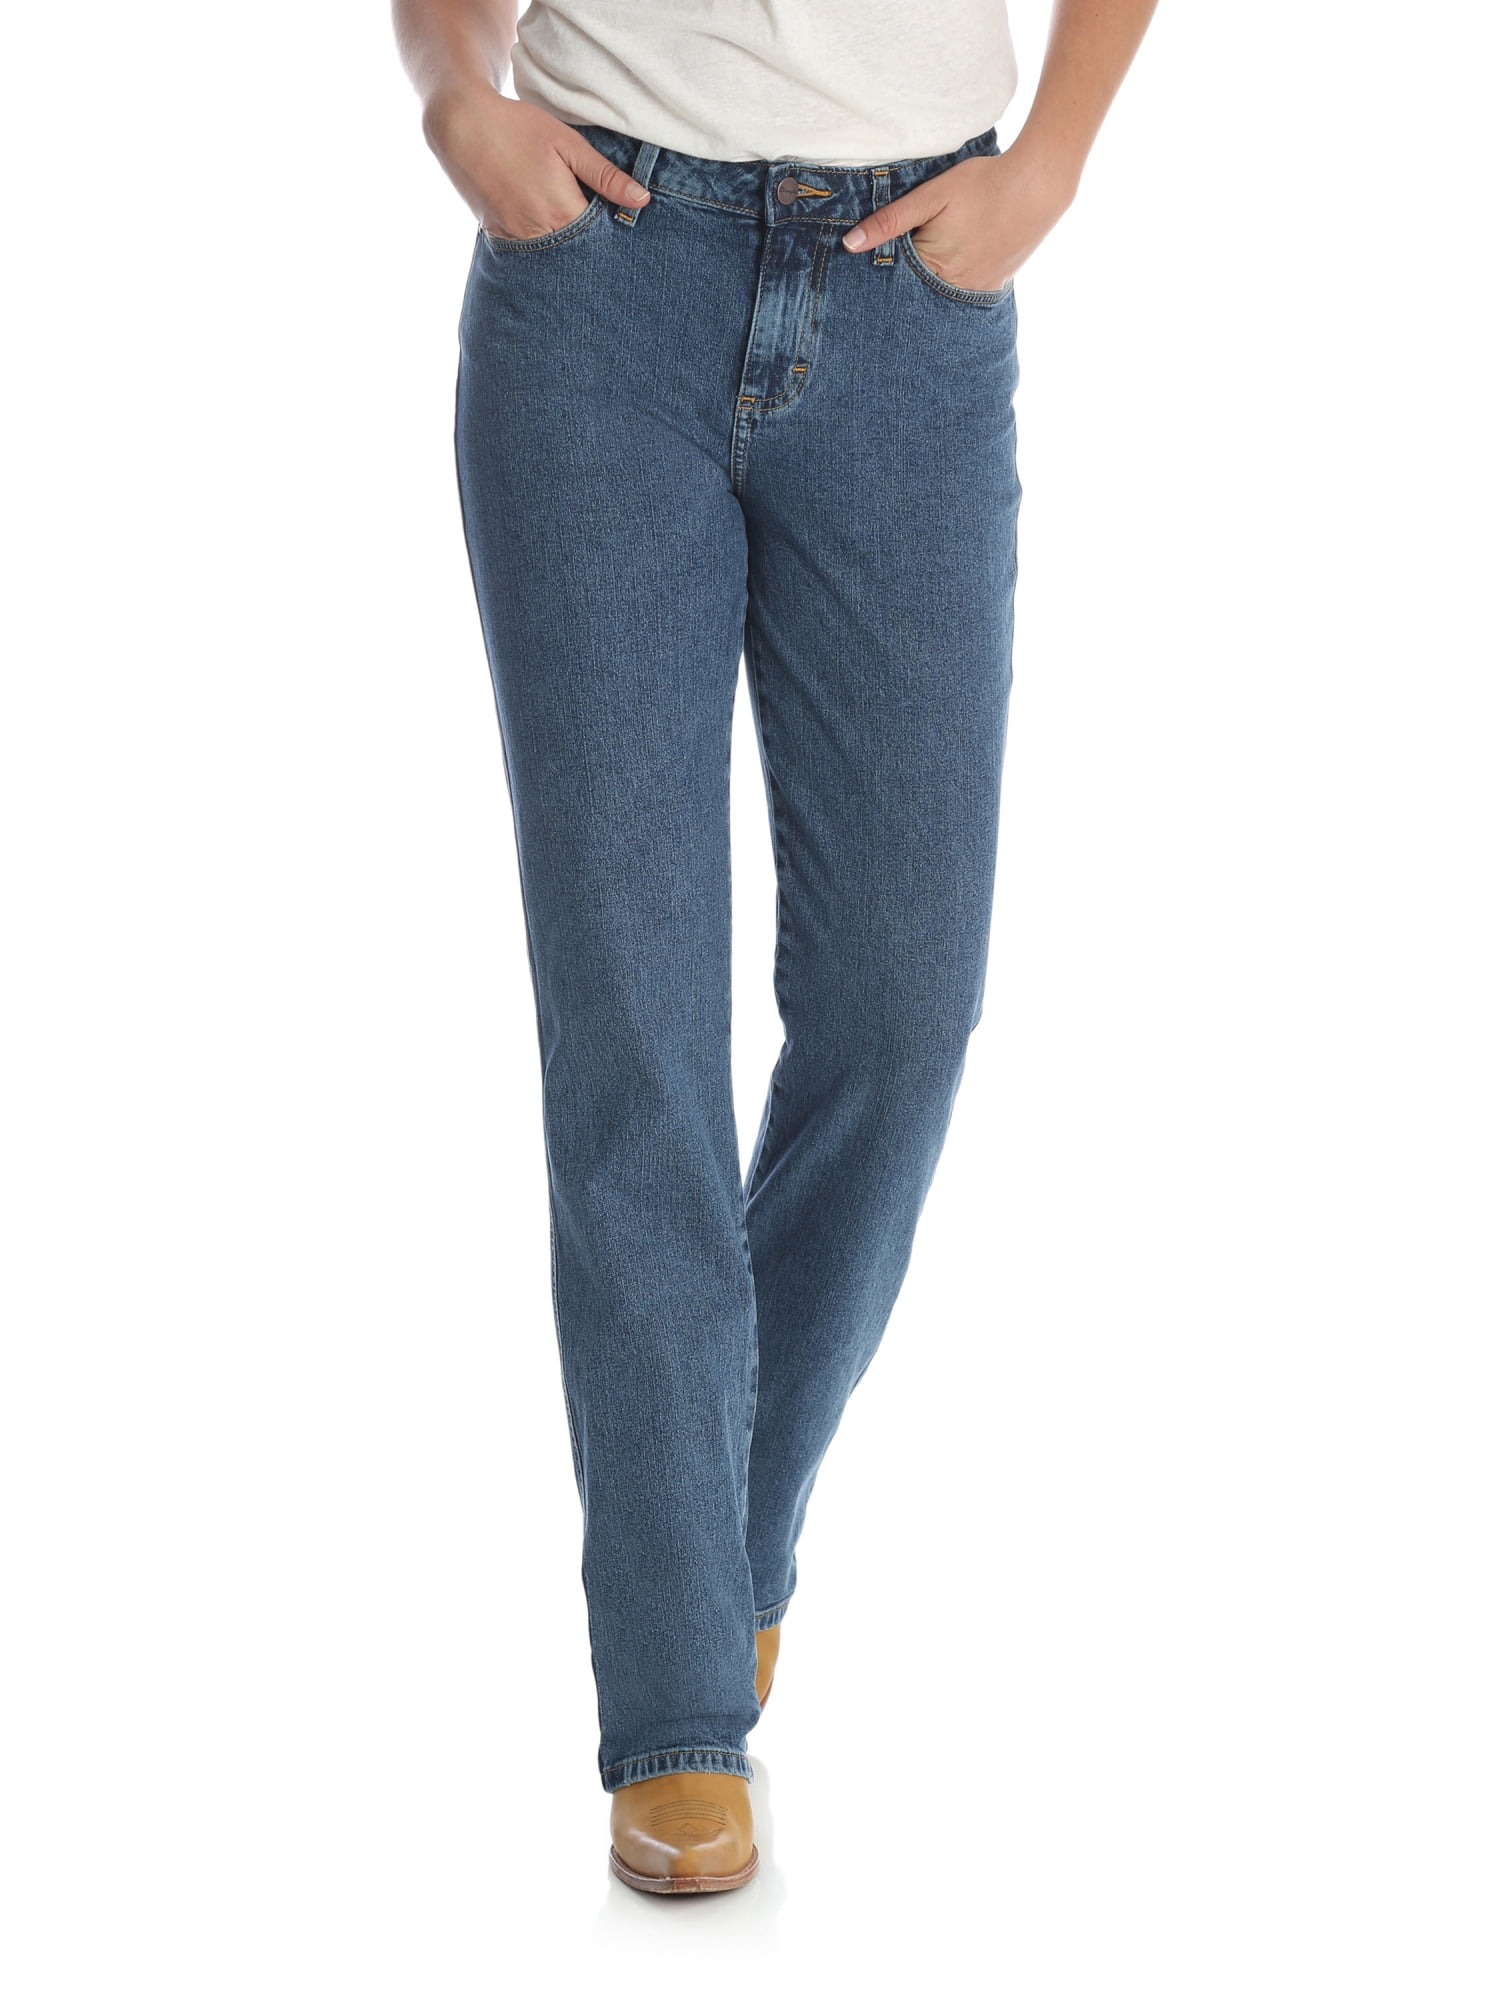 Wrangler Women's Cowboy Cut Slim Fit Stretch Jean 